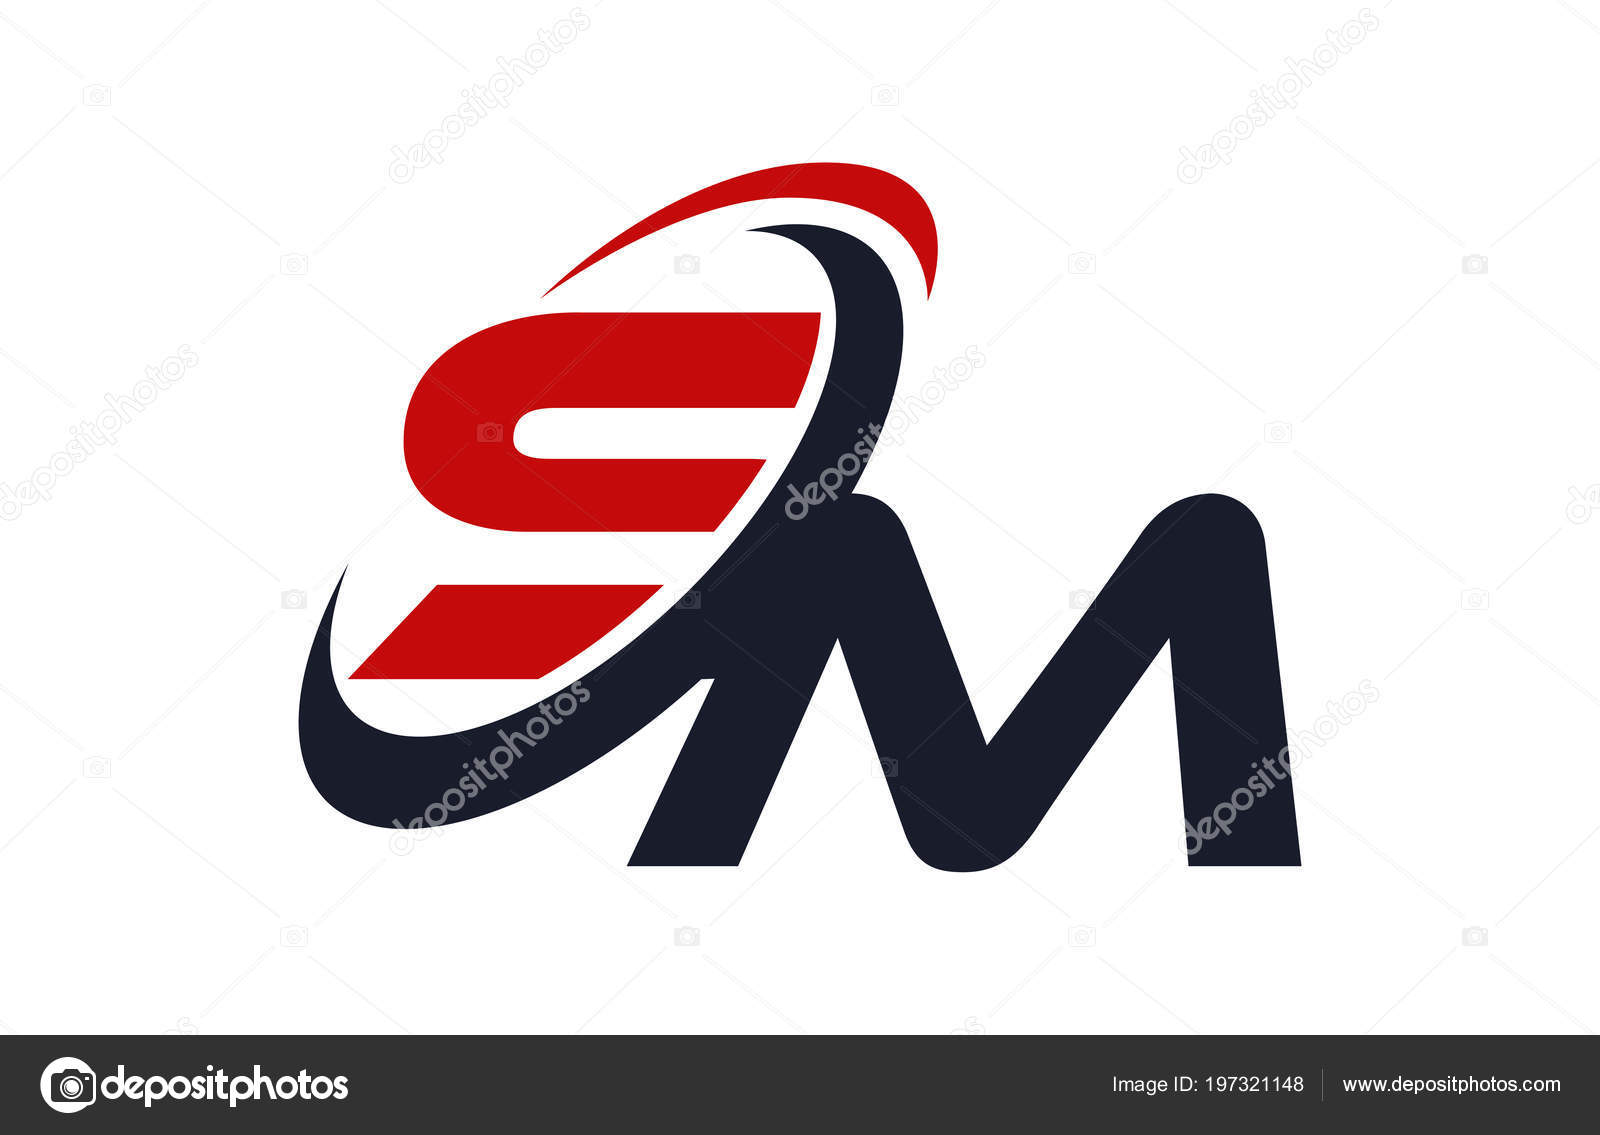 1 6 Sm Logo Vector Images Free Royalty Free Sm Logo Vectors Depositphotos